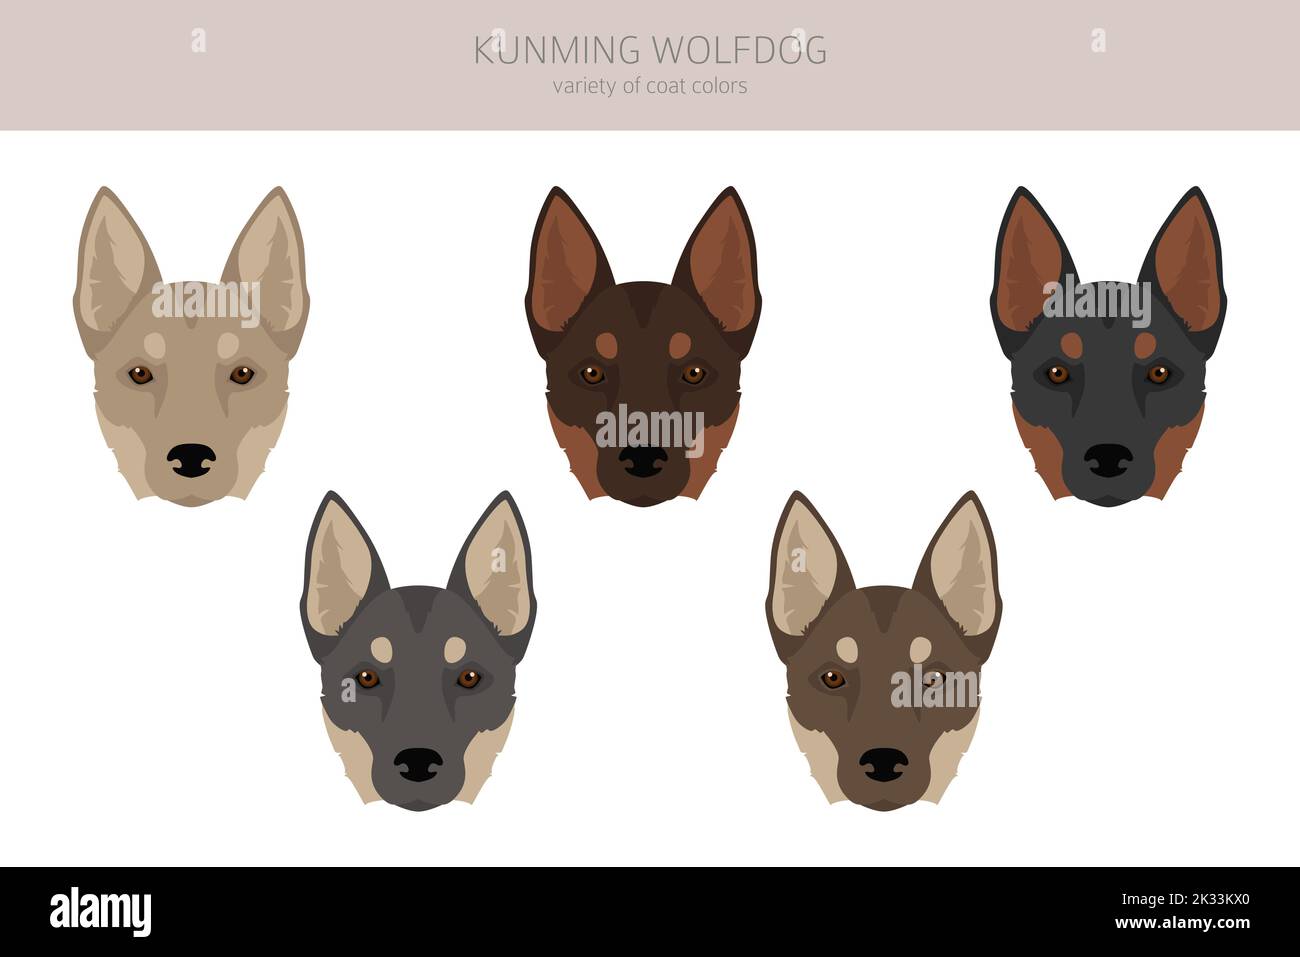 Kunming wolfdog clipart. Different coat colors set.  Vector illustration Stock Vector